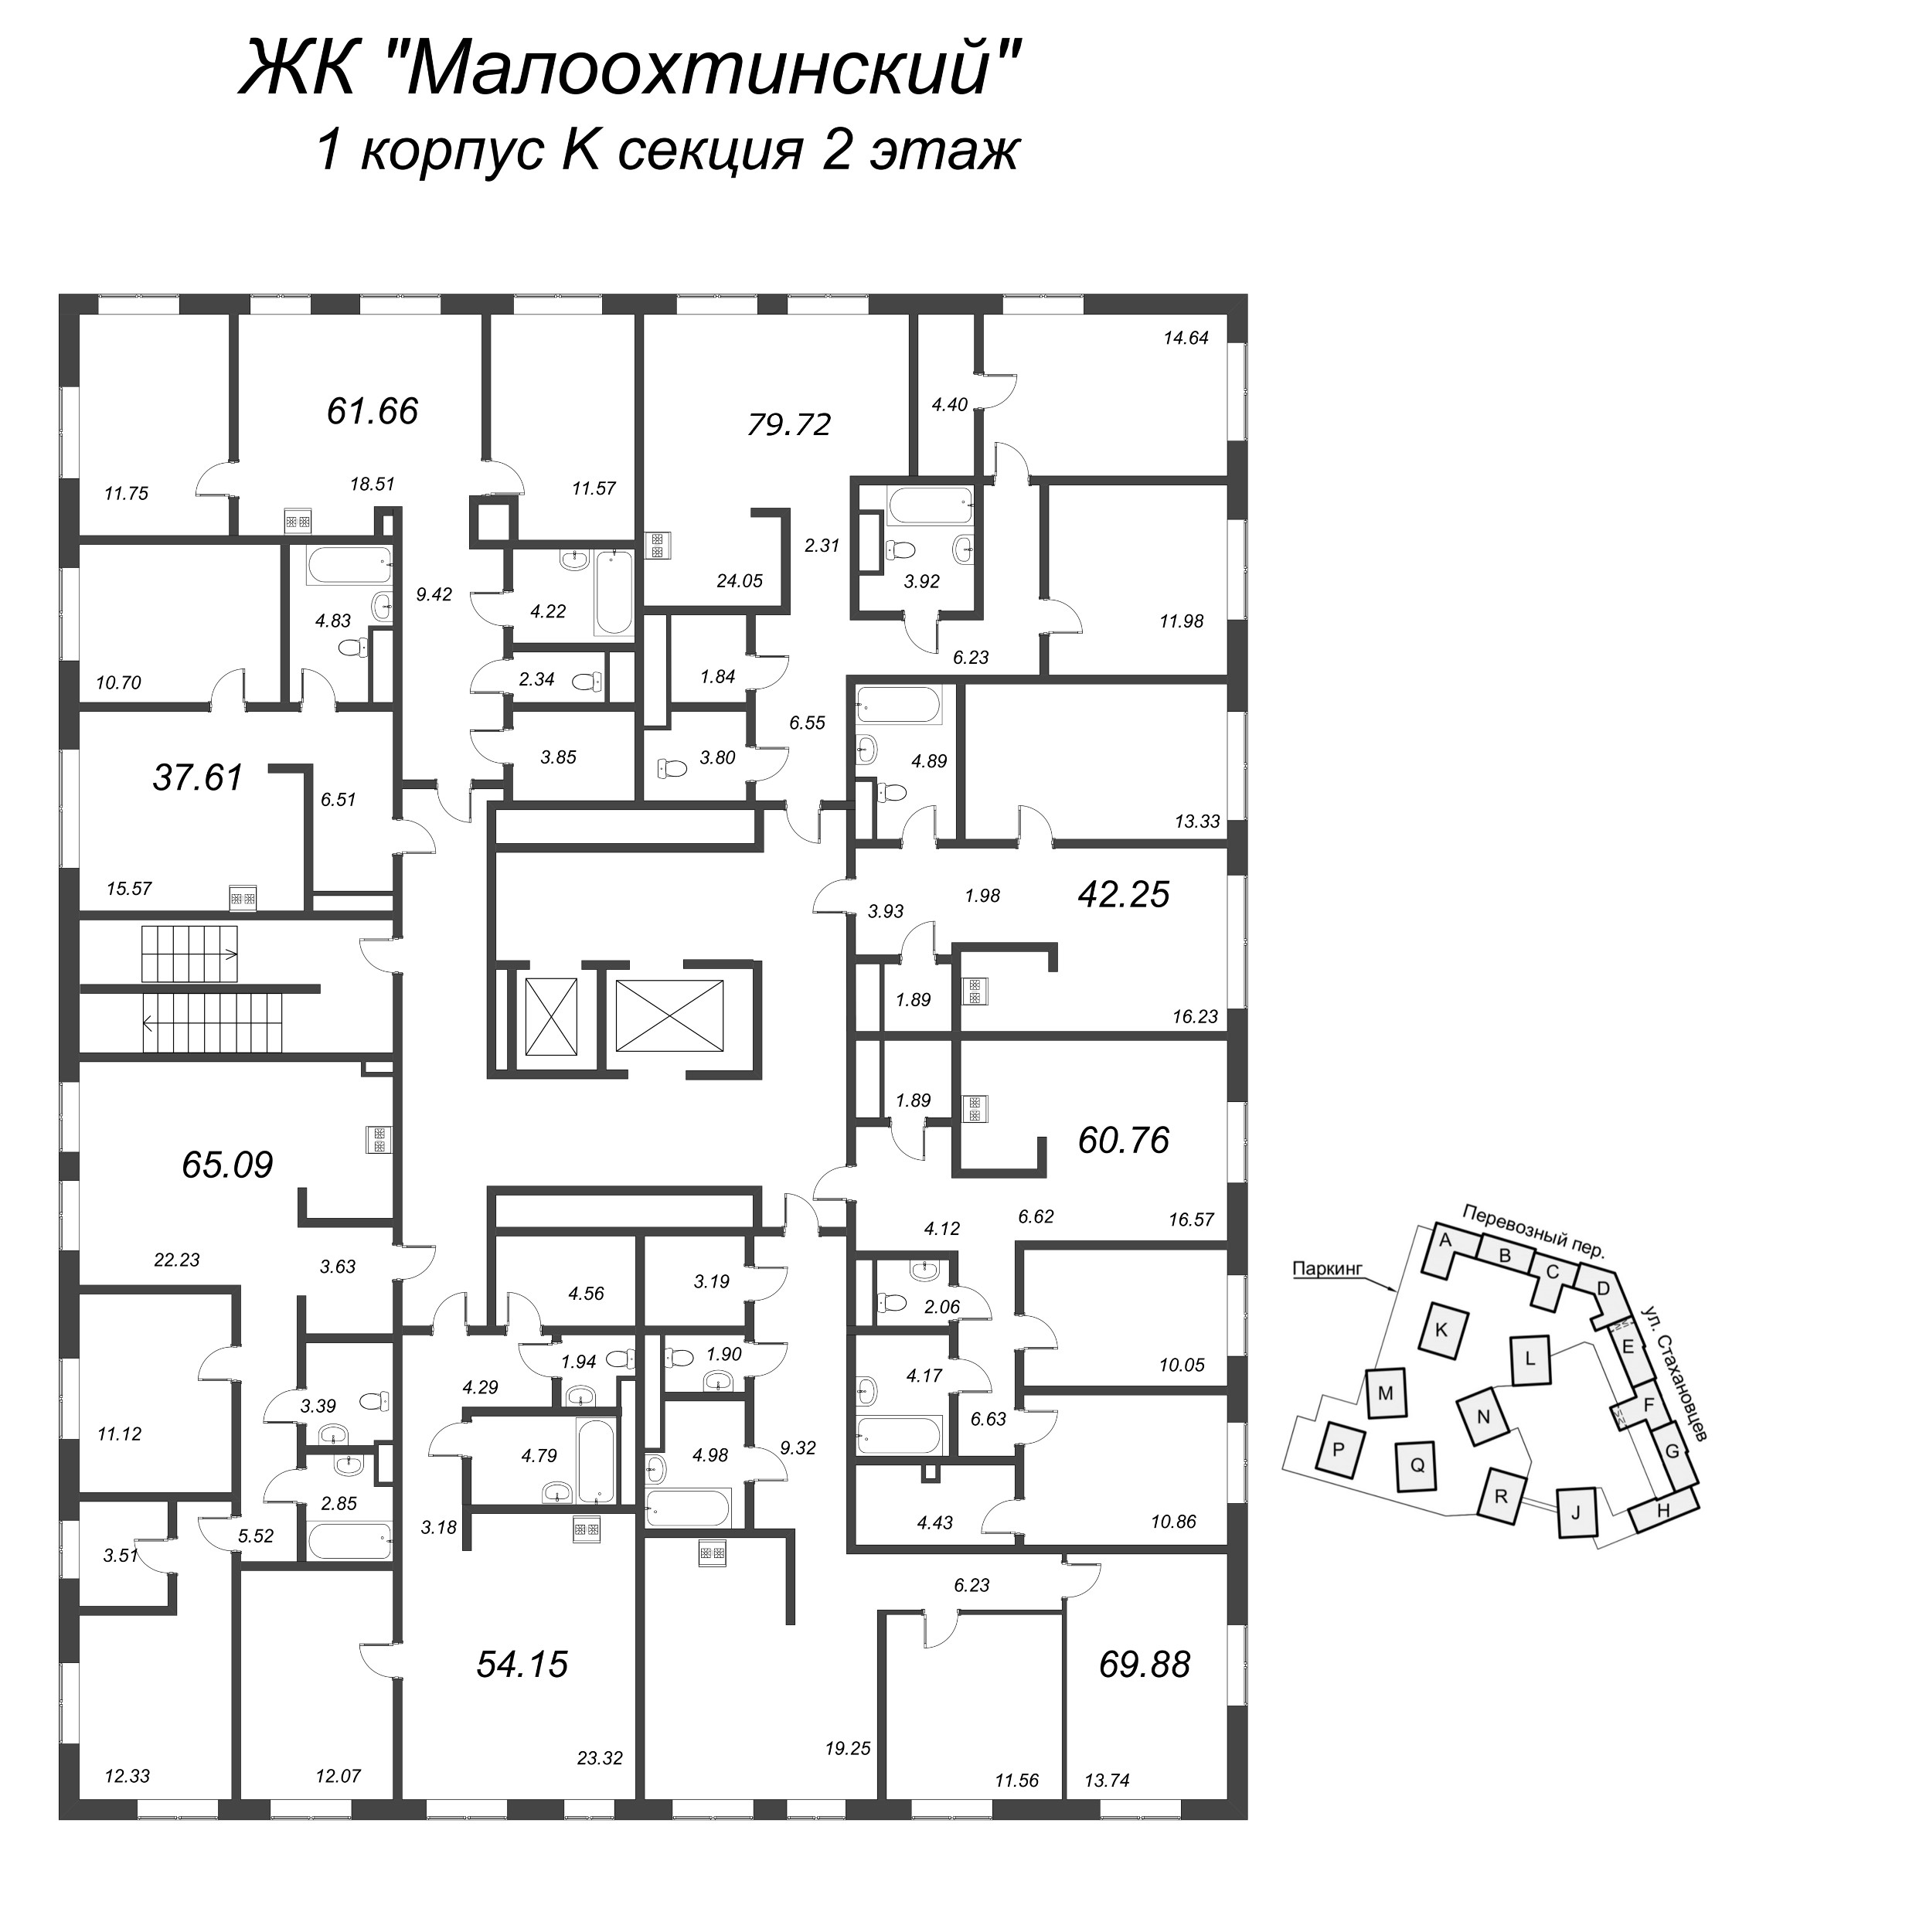 3-комнатная (Евро) квартира, 73.3 м² - планировка этажа